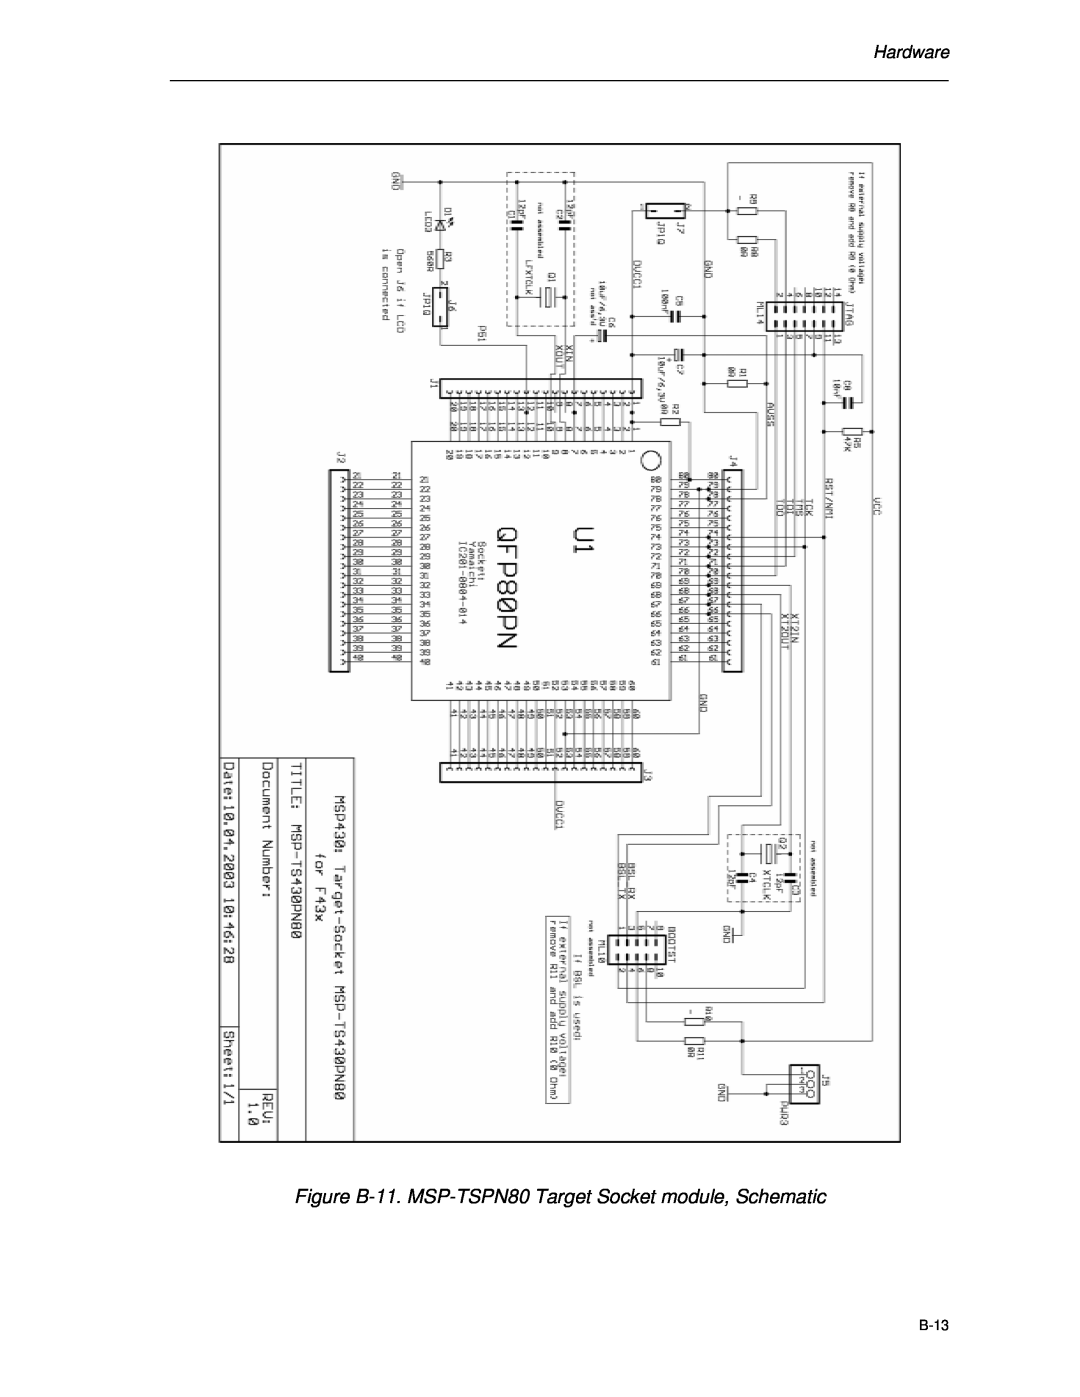 Texas Instruments MSP-FET430 manual Figure B-11. MSP-TSPN80 Target Socket module, Schematic, Hardware, B-13 